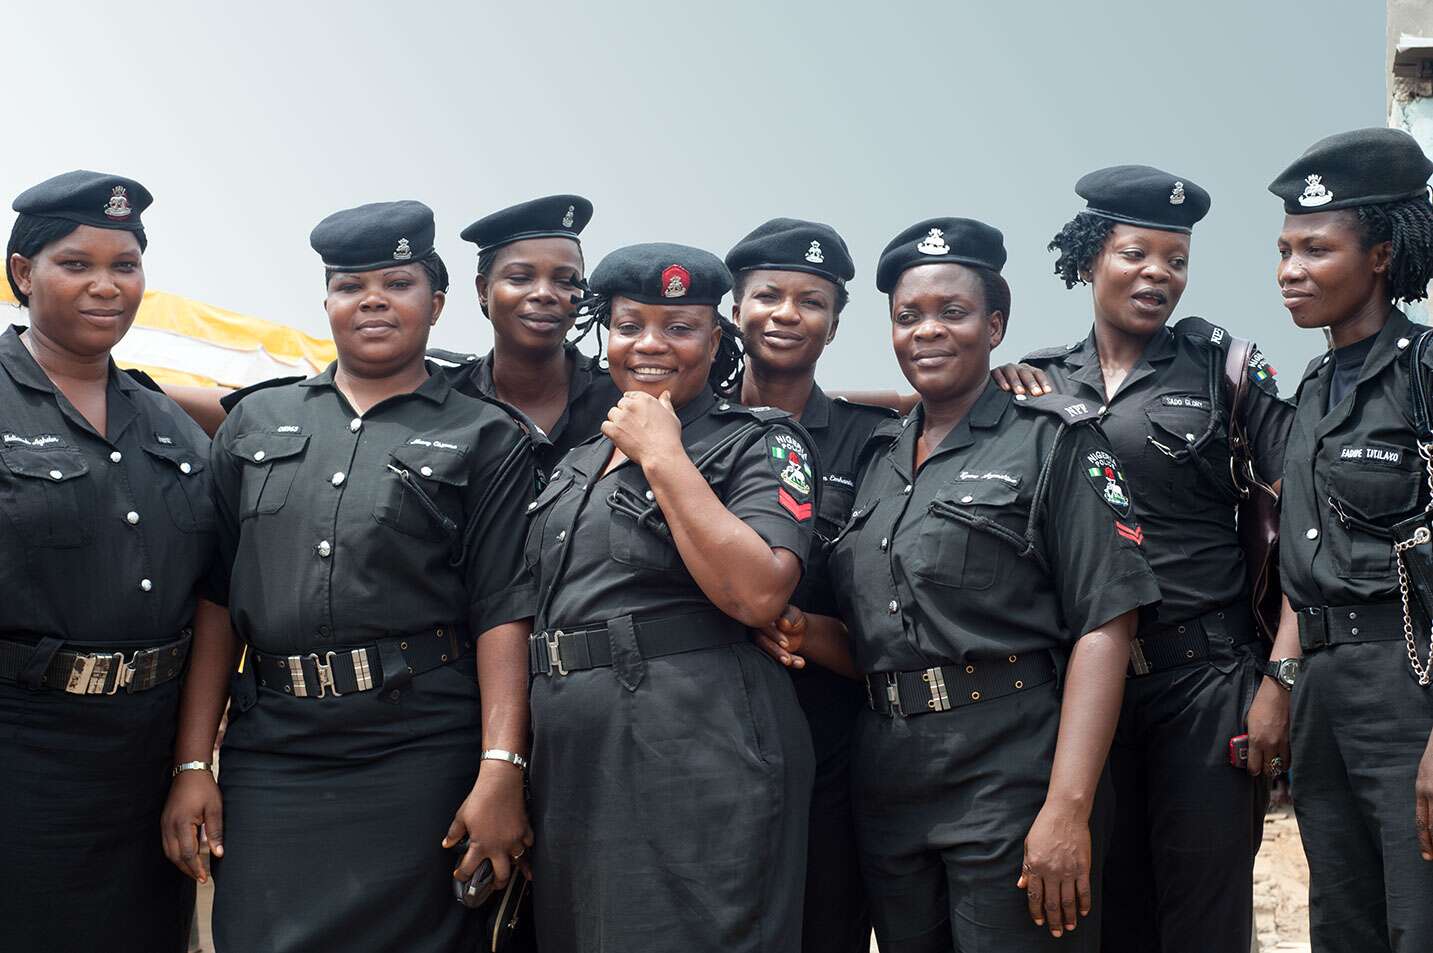 NIGERIA POLICE FEMALE OFFICERS.